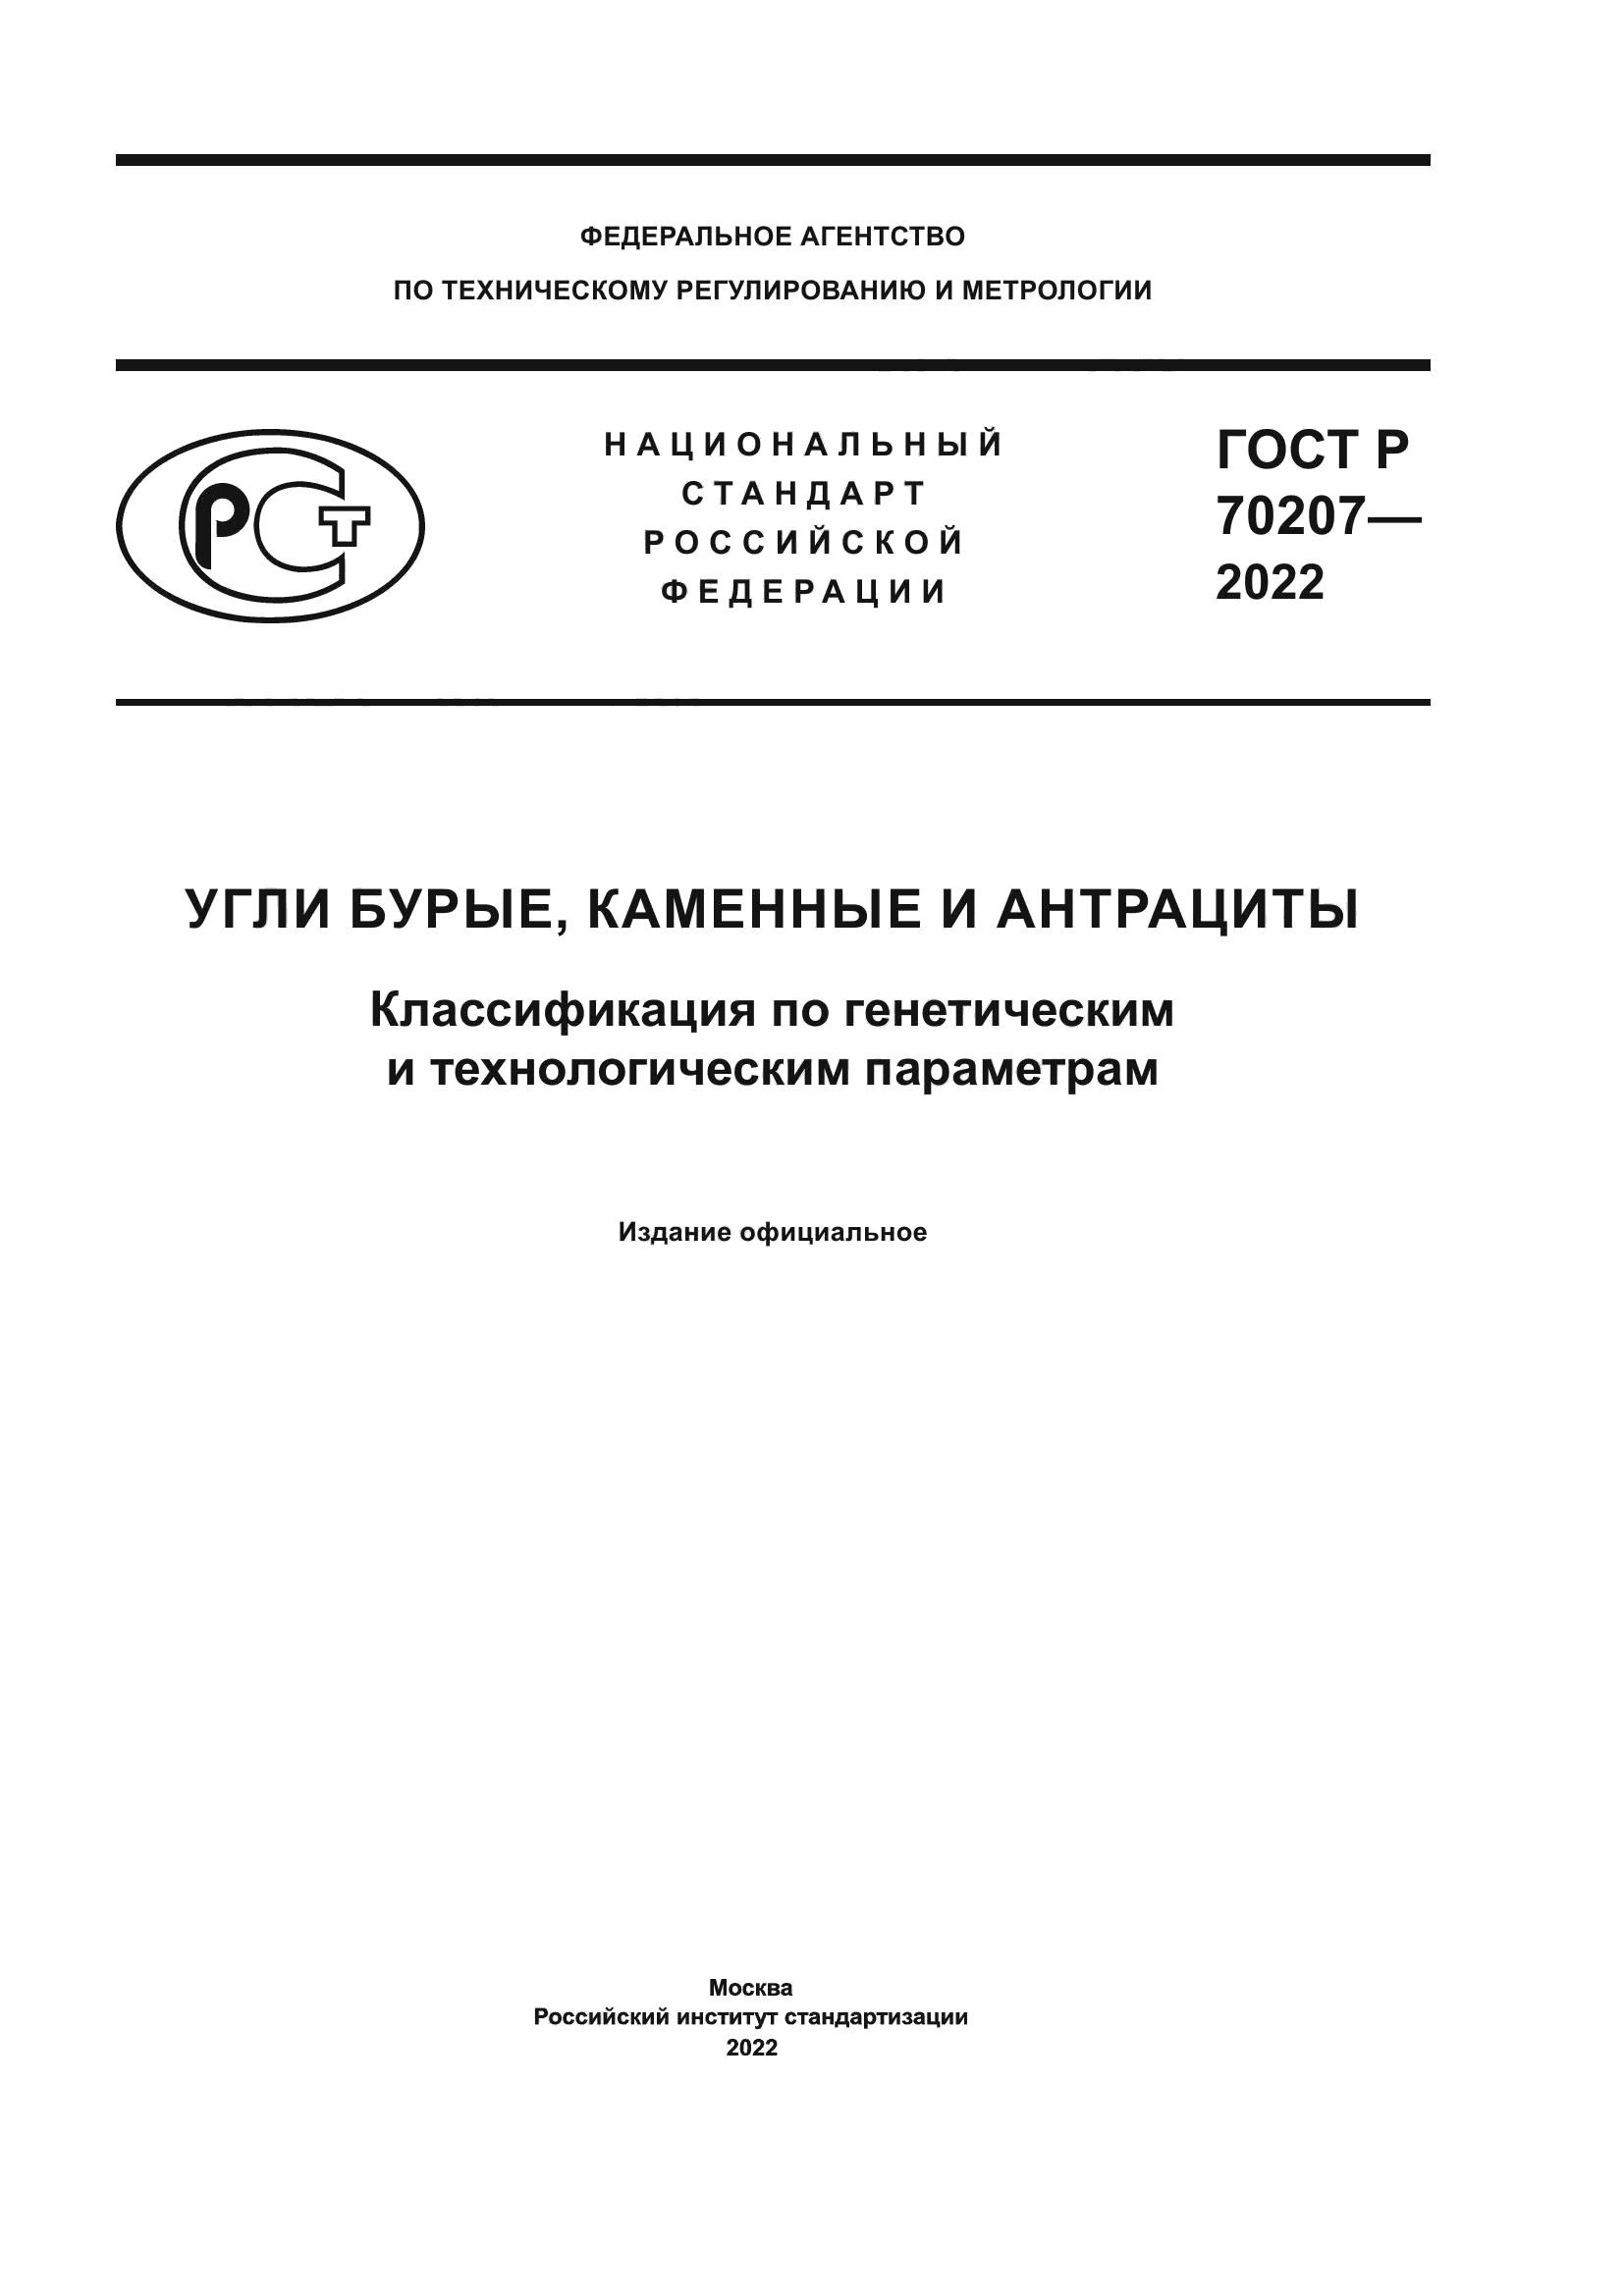 ГОСТ Р 70207-2022